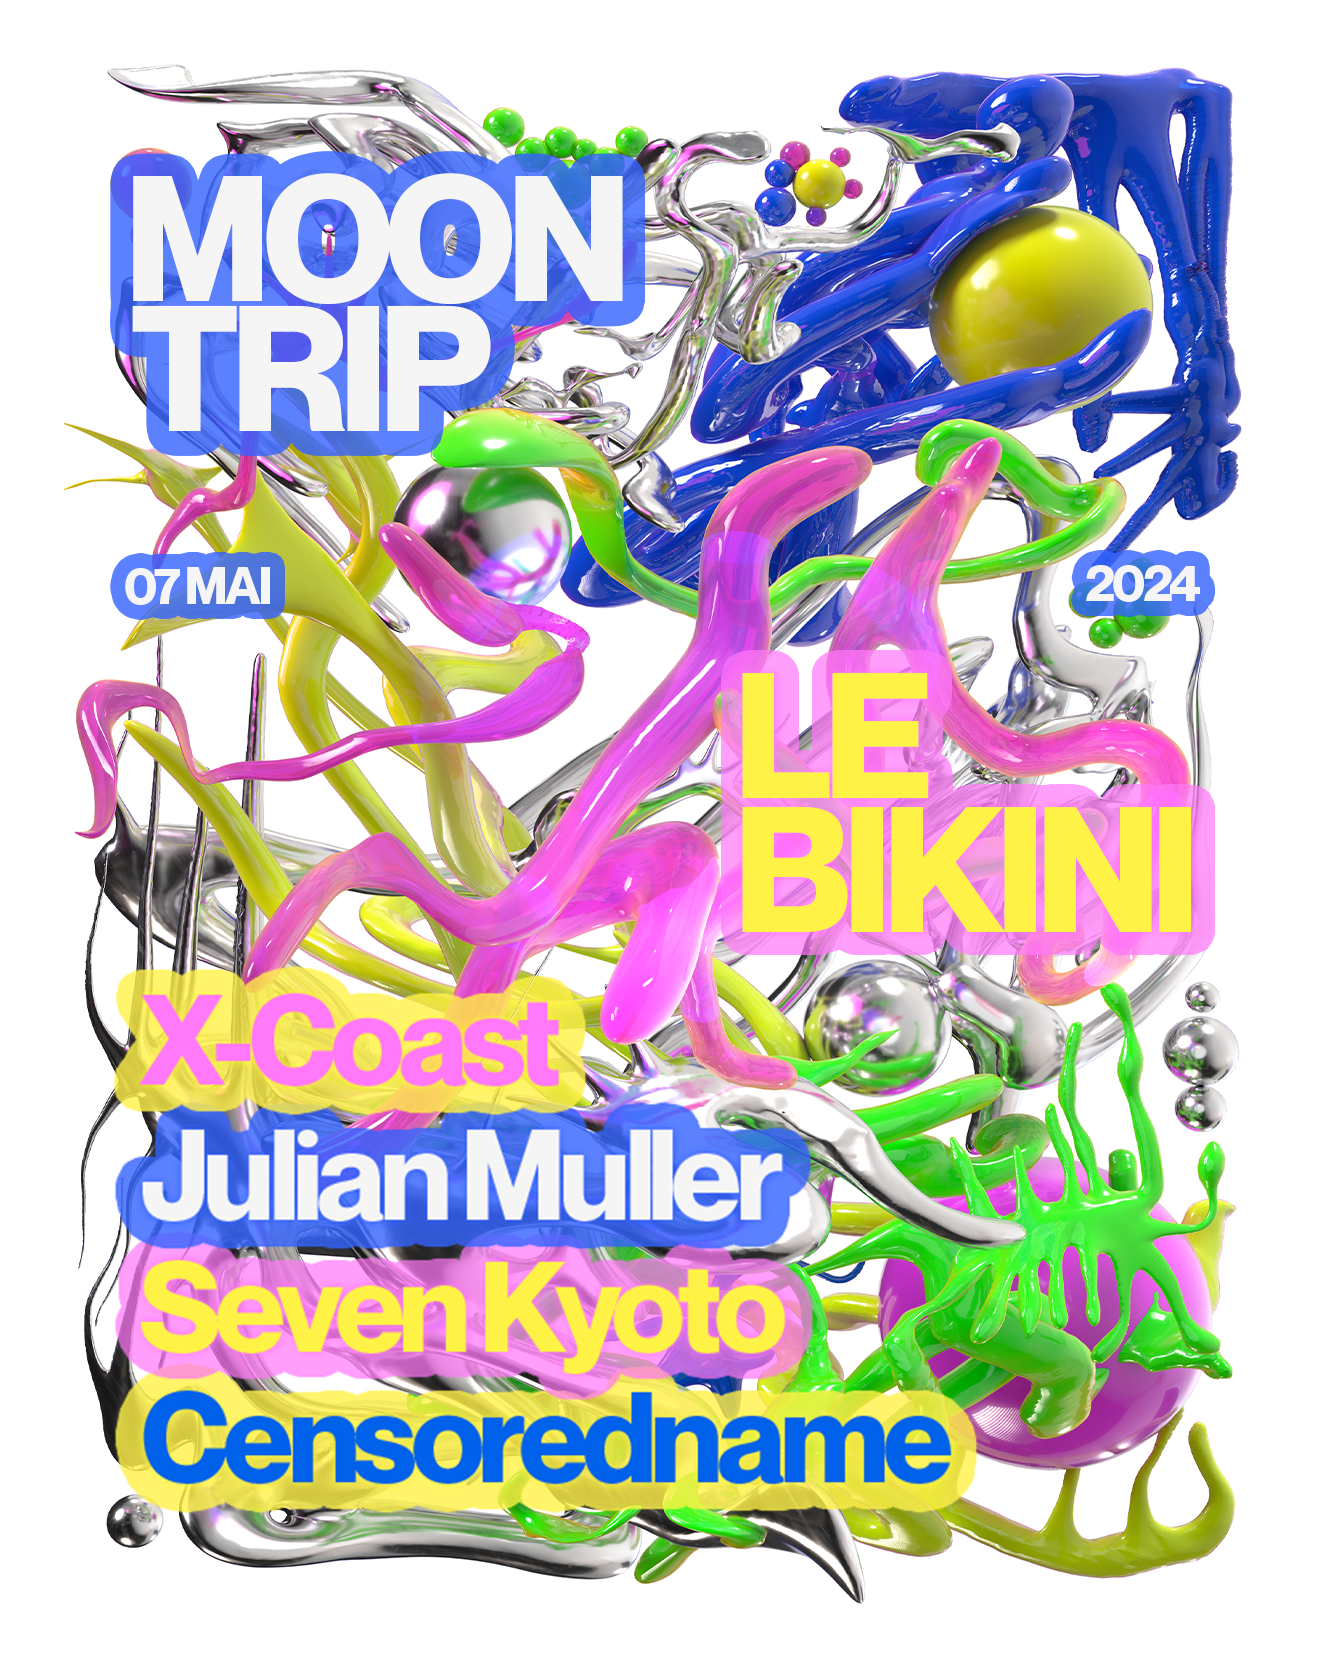 Moontrip X Le Bikini: X-Coast & Julian Muller - フライヤー表